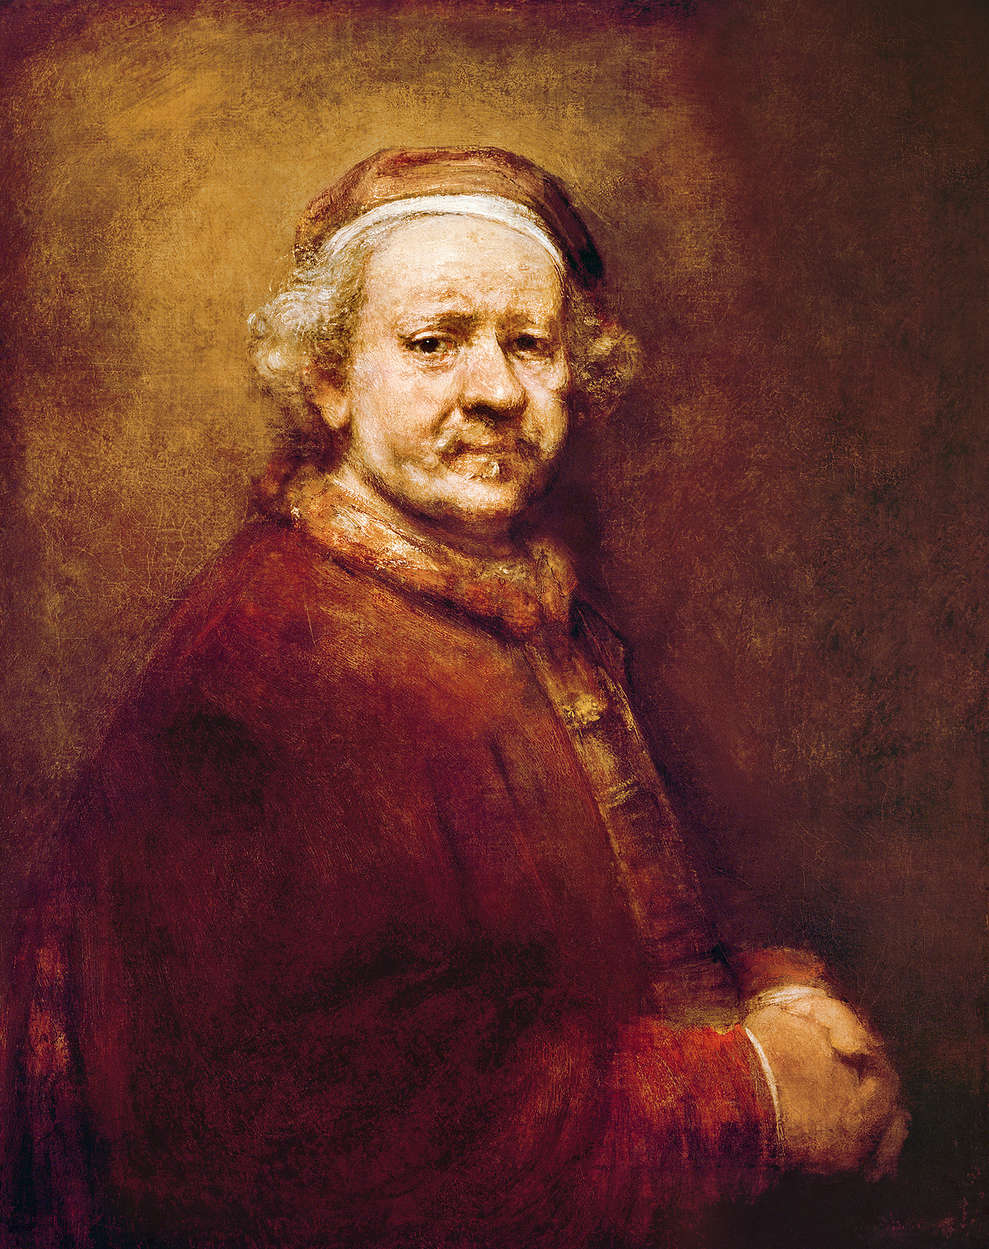             Fototapete "Selbstbildnis" von Rembrandt van Rijn
        